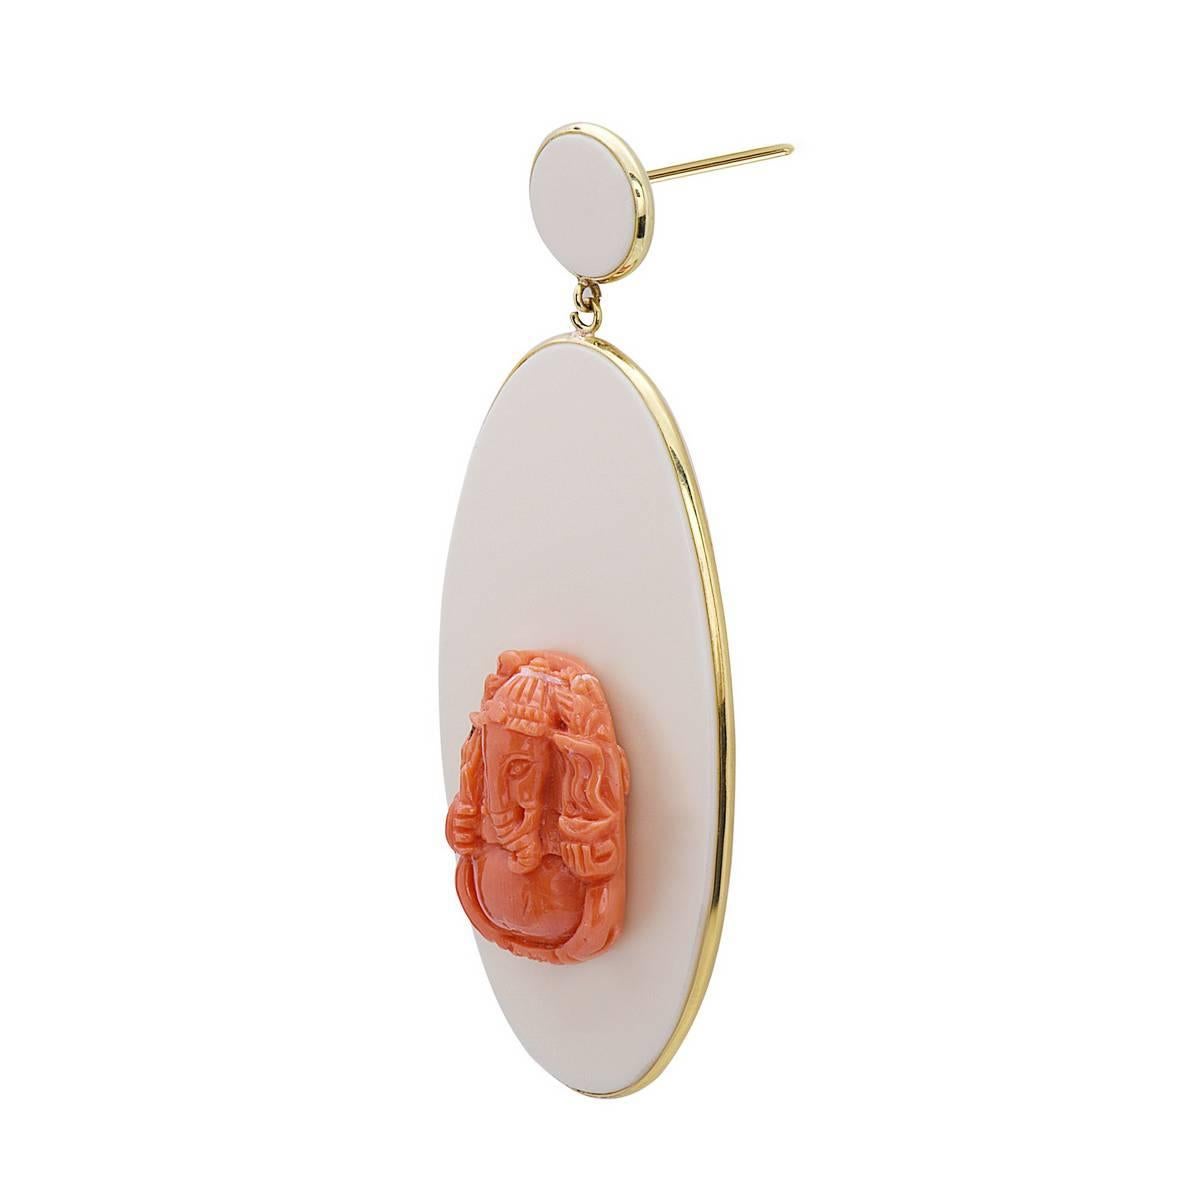 Beautiful Italian Bakelite Earring with Coral Ganesha in 18K Yellow Gold.

